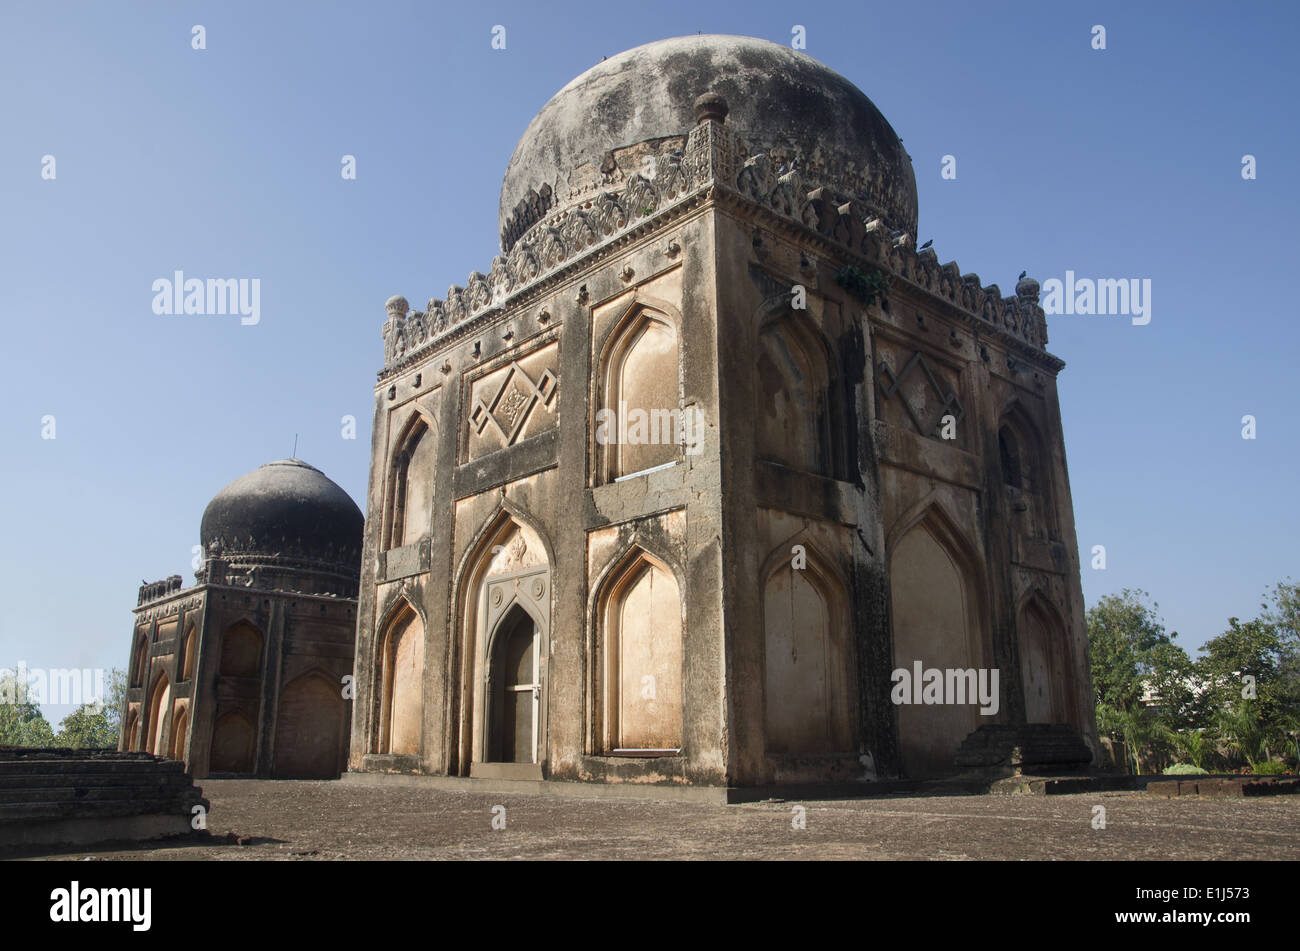 Barber's tomb on the left and tomb of  Khan Jahan on the right. Barid Shahi Garden, Bidar, Karnataka, India Stock Photo